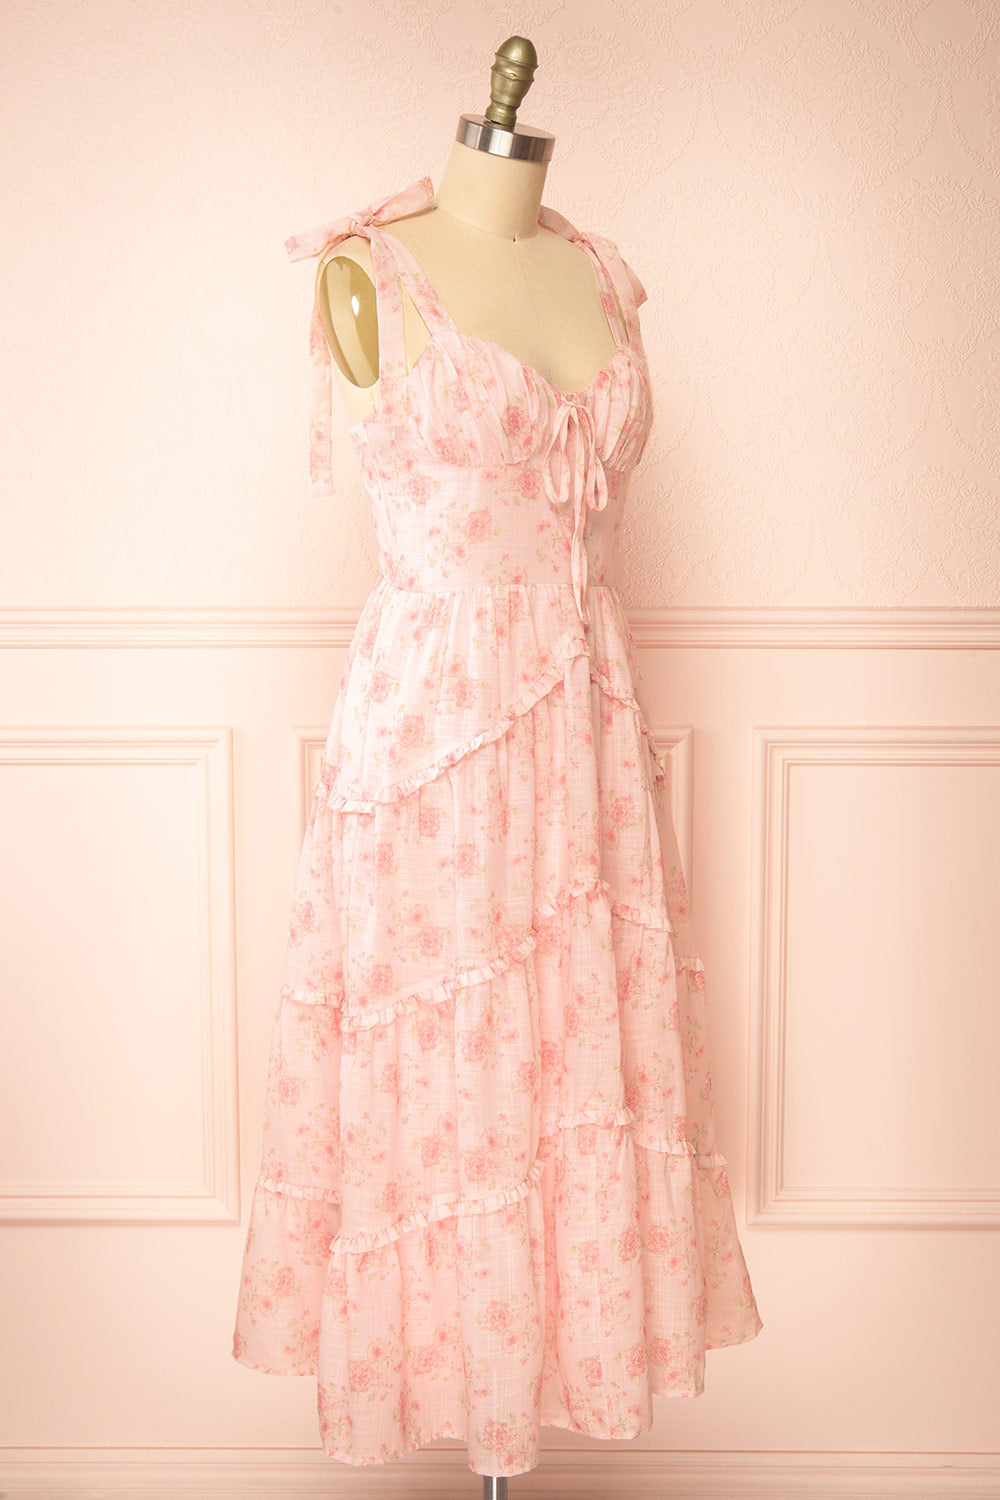 Taylor Midi Pink Floral Dress w/ Bow Straps | Boutique 1861 side view 